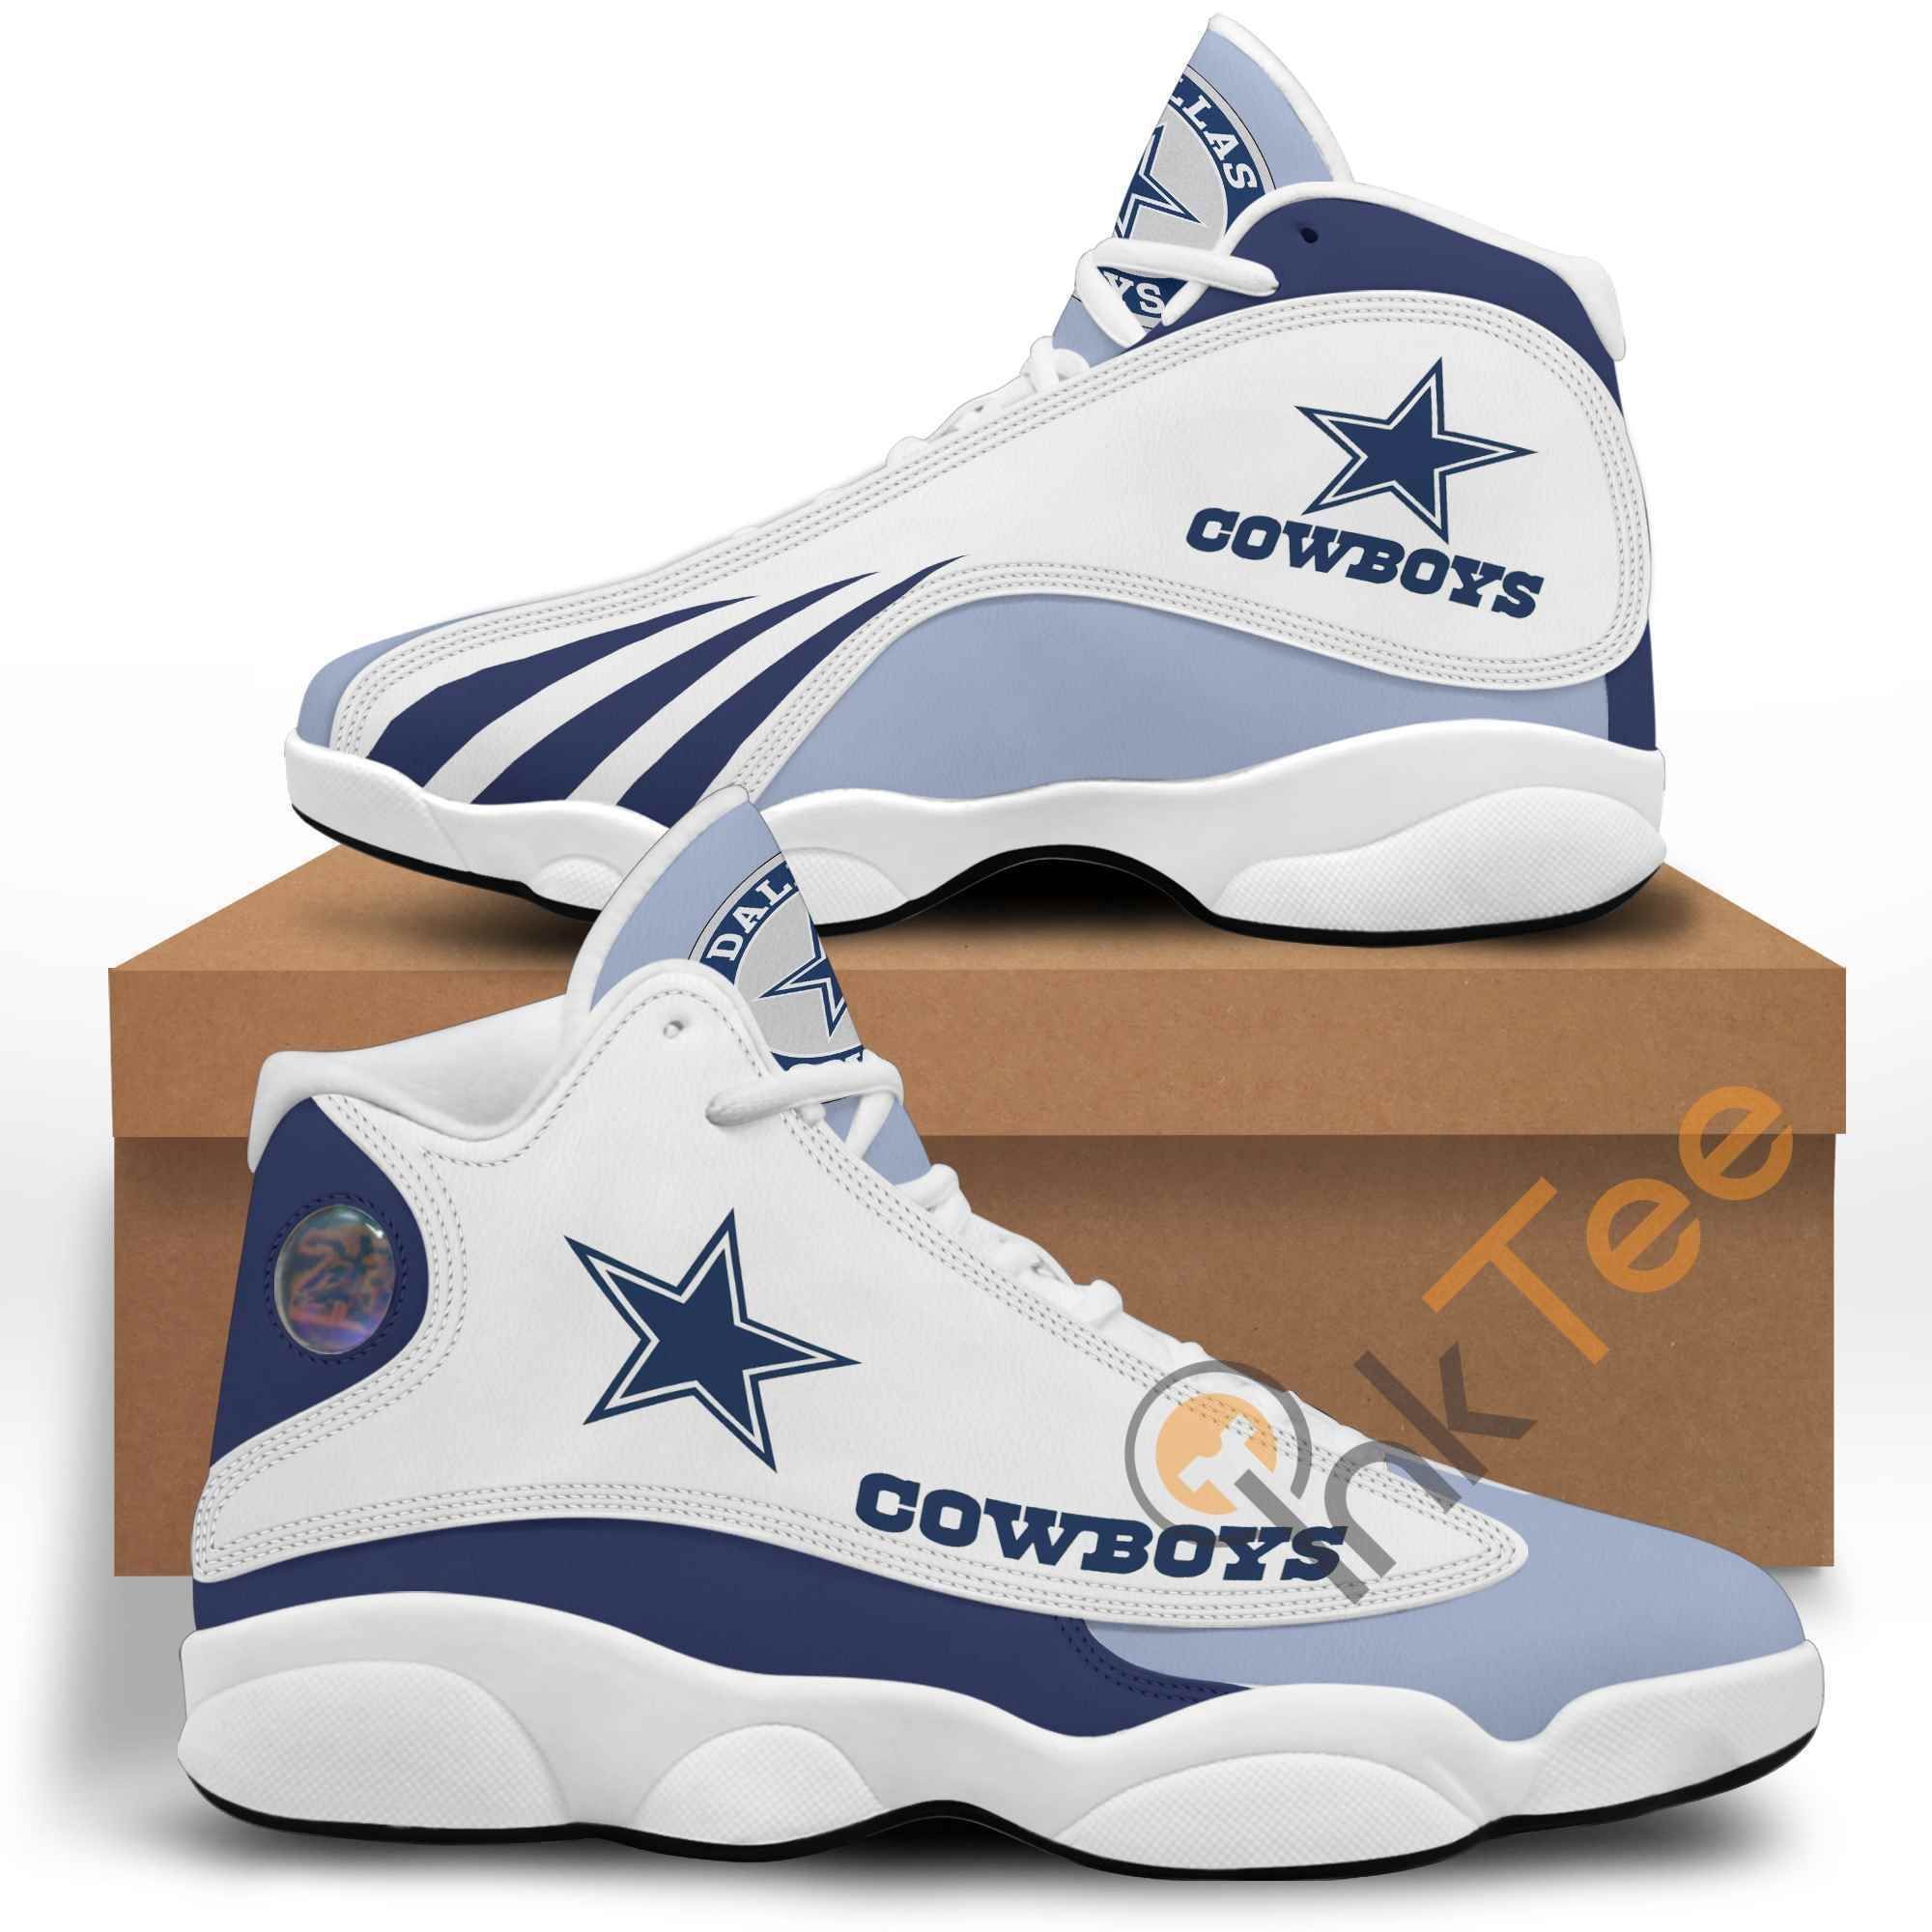 Nfl dallas cowboys air jordan 13s customized shoes - men / us 11